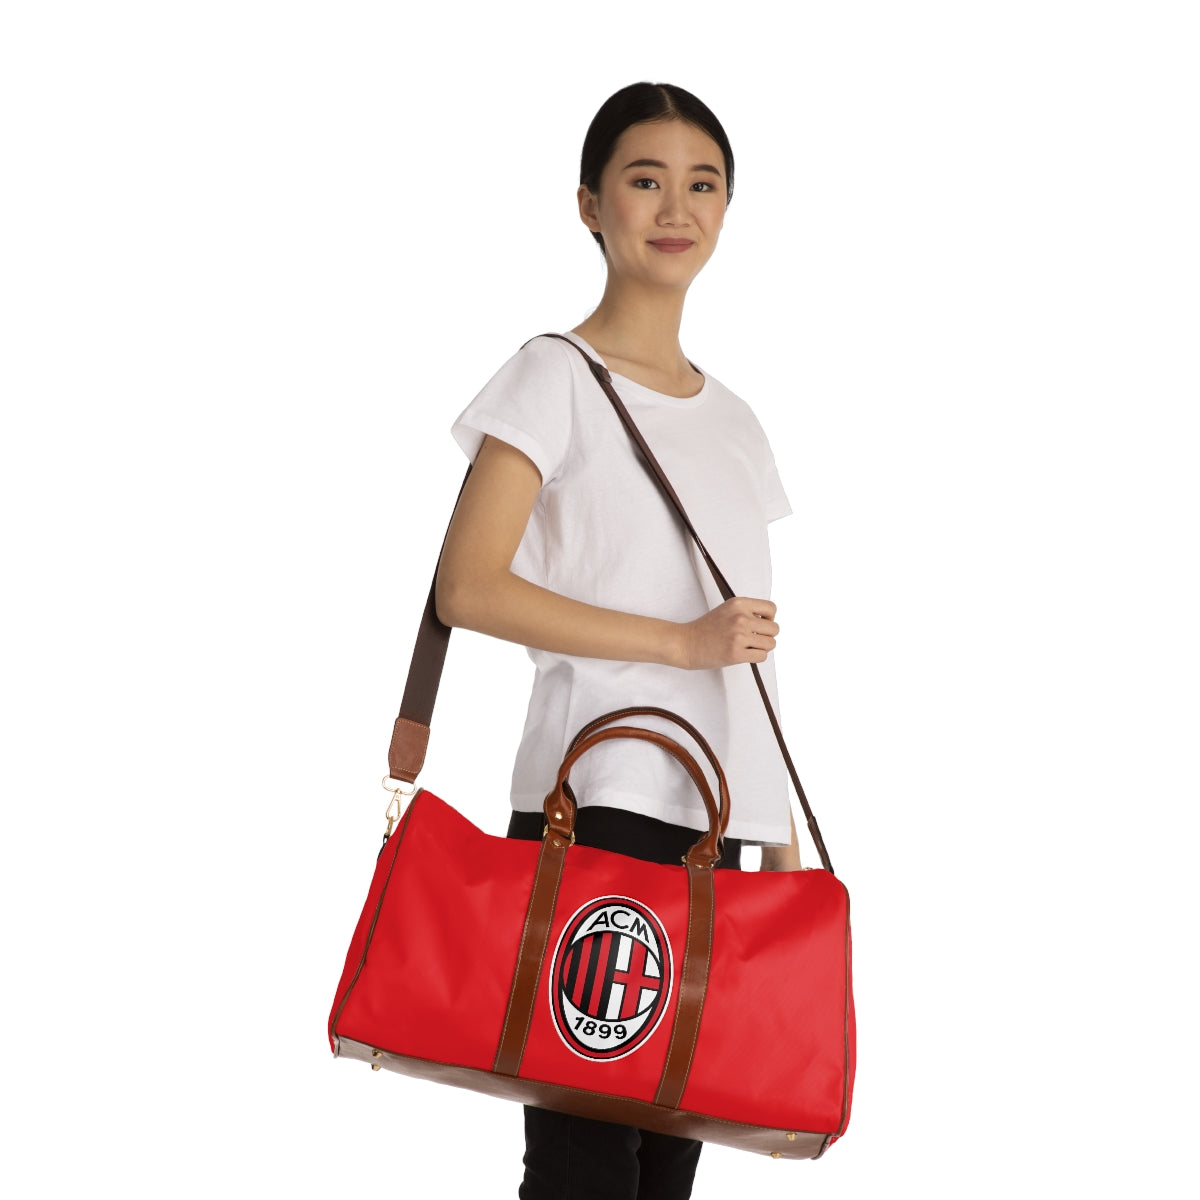 AC Milan Waterproof Travel Bag